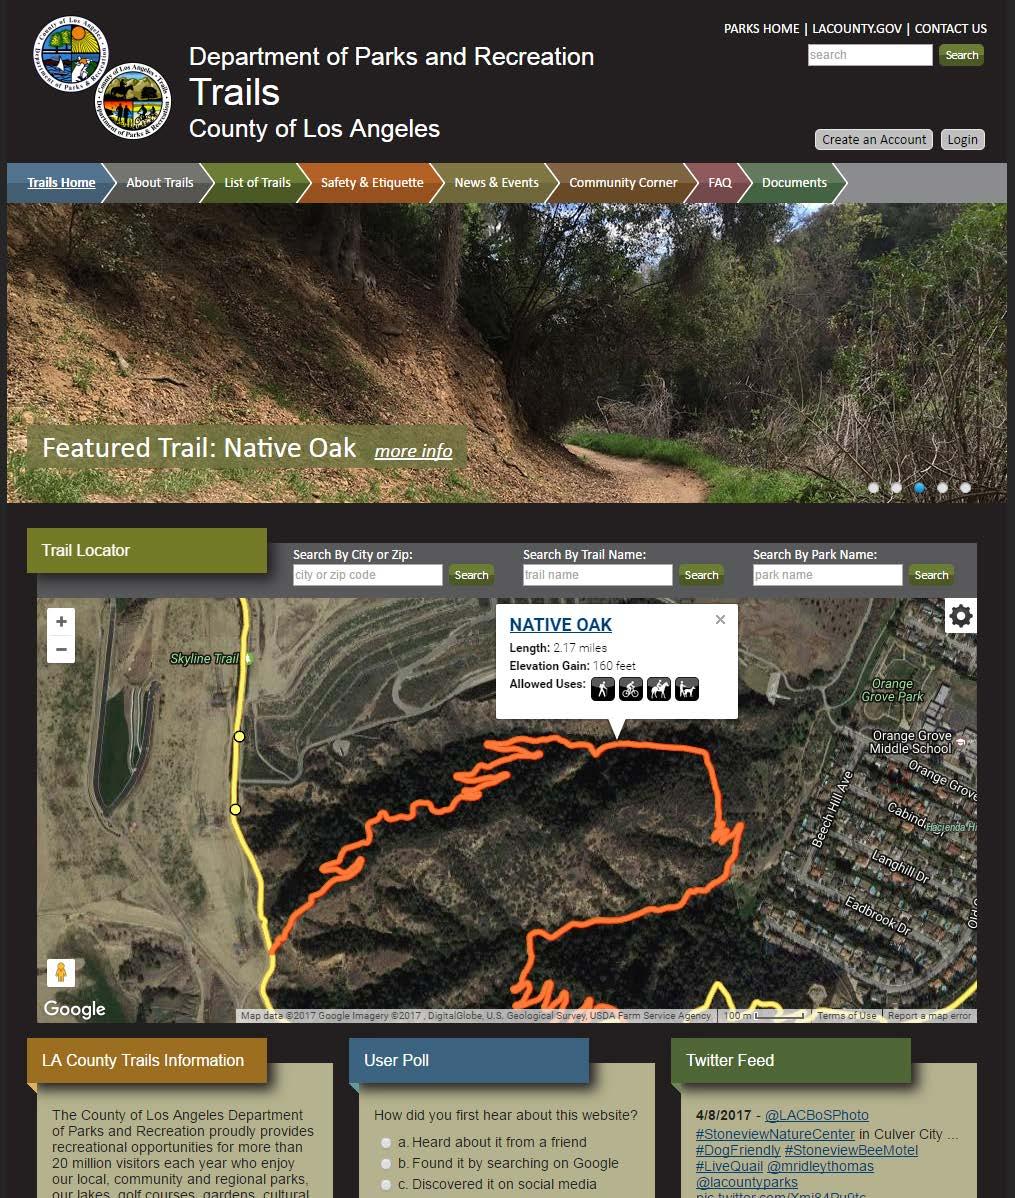 LA County Trails Website: trails.lacounty.